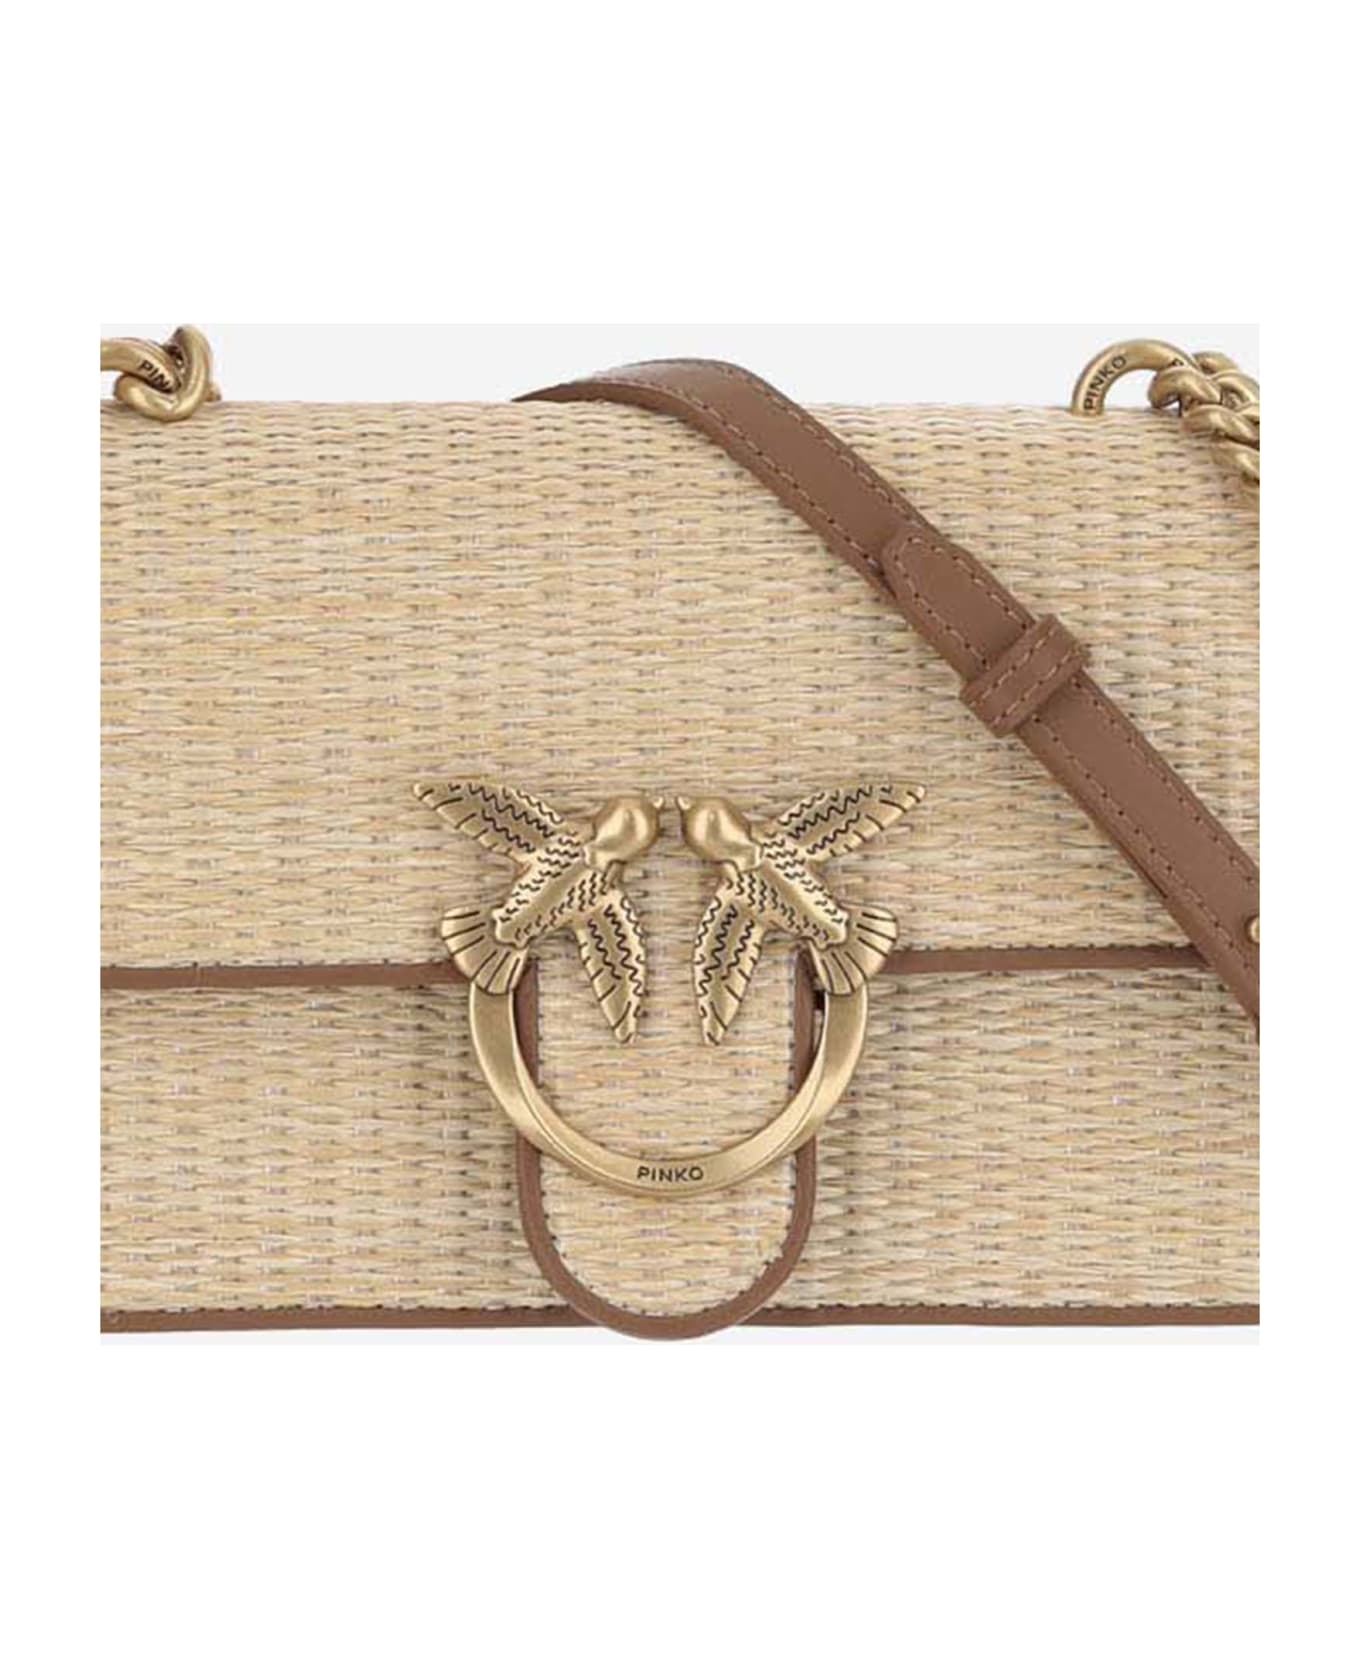 Pinko Mini Love Light Bag In Raffia And Leather - Naturale/cuoio-antique gold ショルダーバッグ